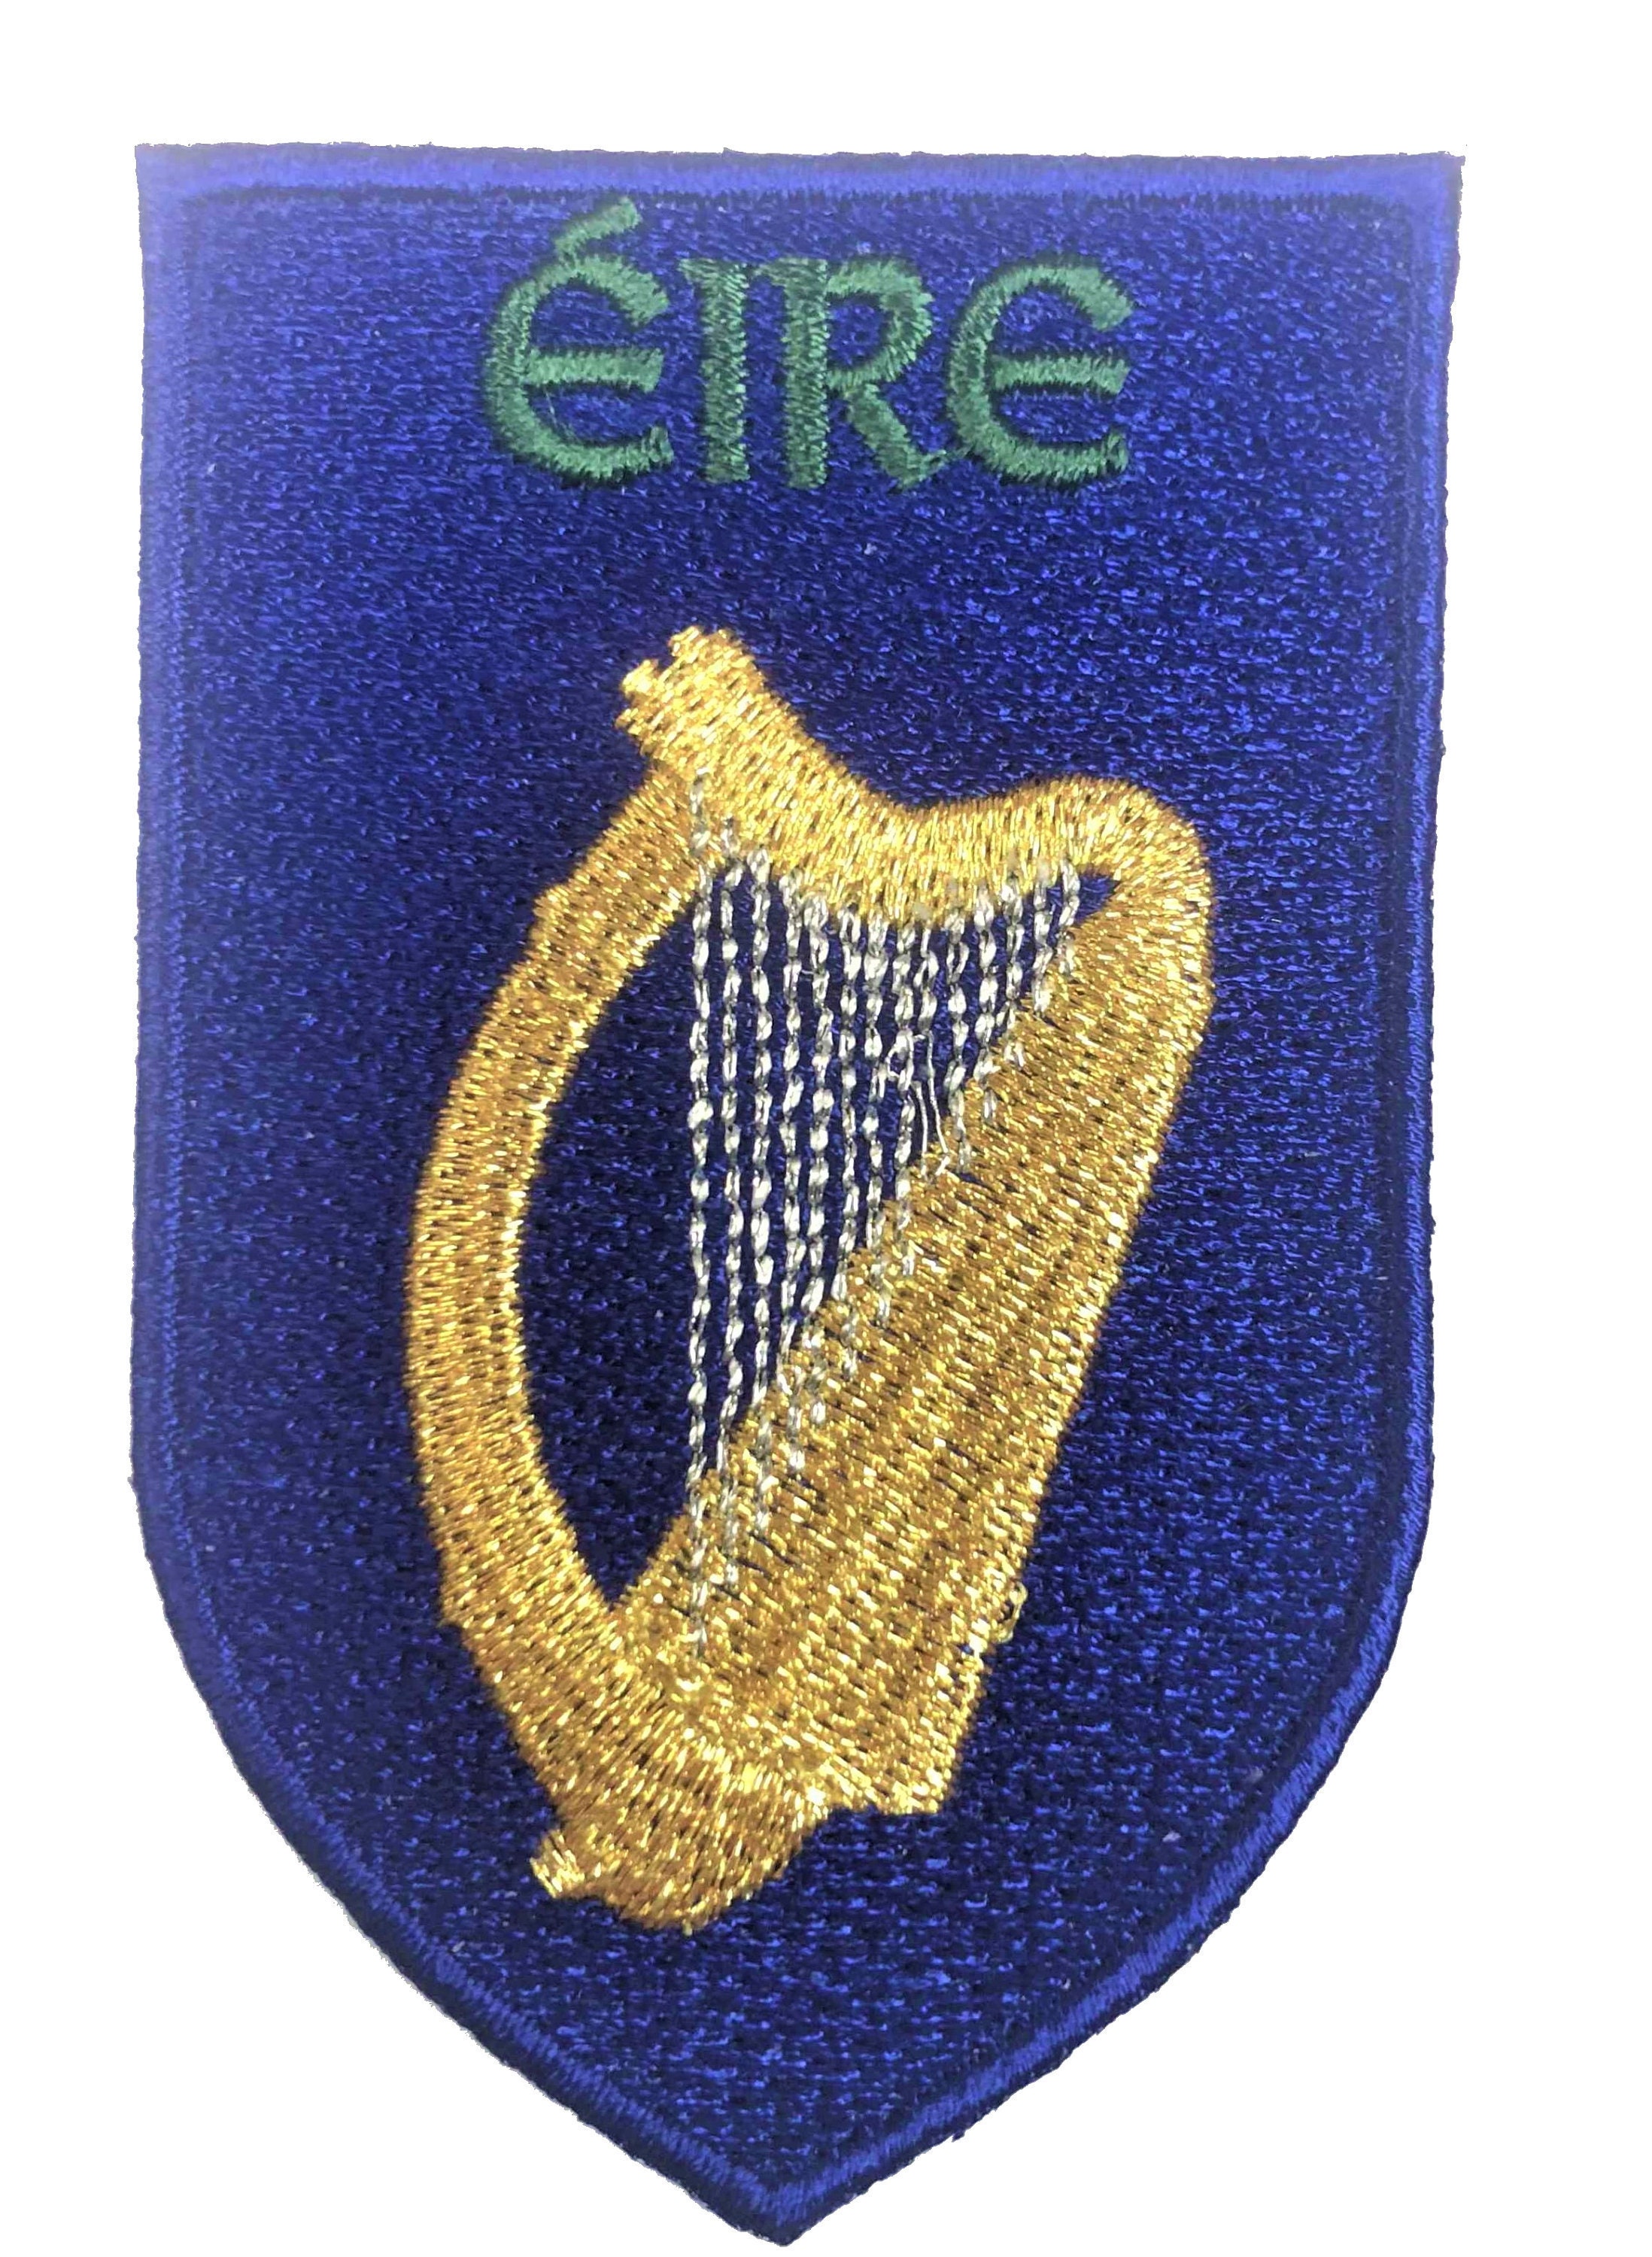 IRELAND IRISH iron-on PATCH COAT OF ARMS EMBLEM HARP embroidered EIRE CELTIC new 